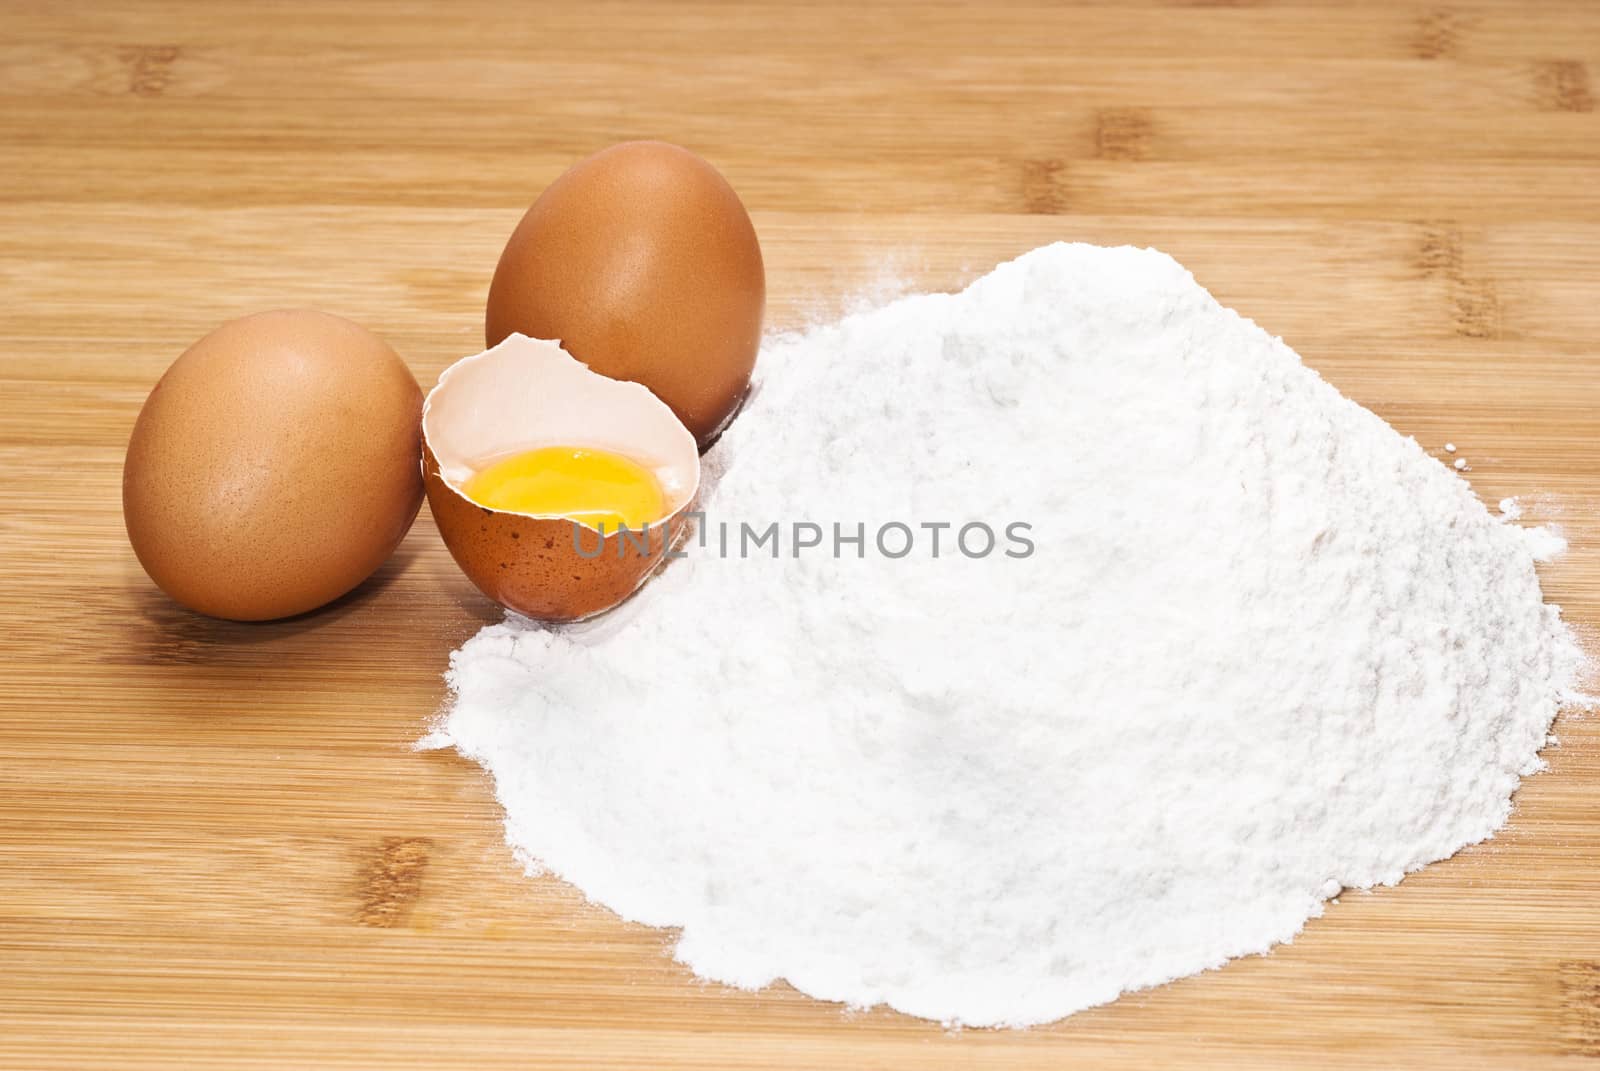 Eggs and flour. preparation of pasta by gandolfocannatella